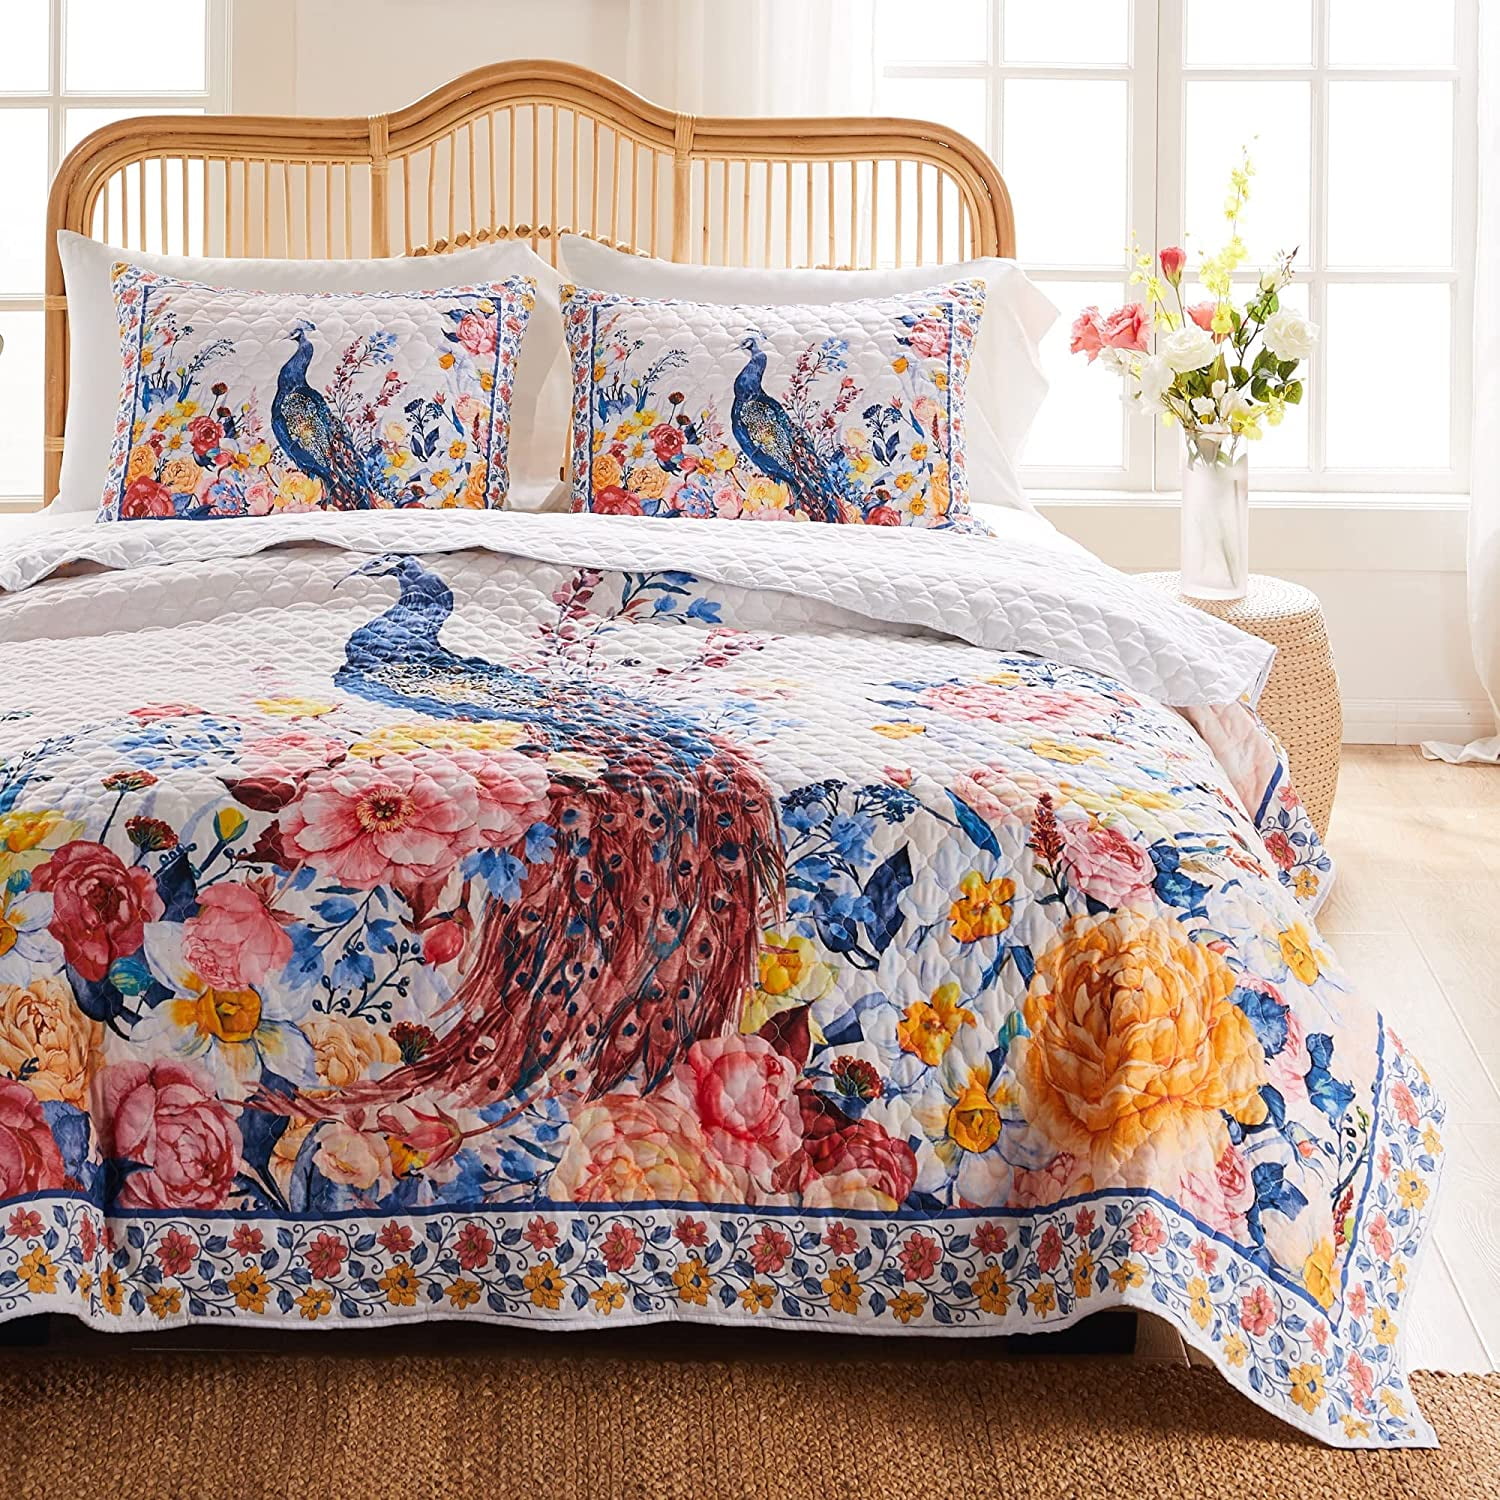 Details about   Indian Handmade Patchwork Kantha Quilt Throw Reversible Bedspread Queen Blanket 